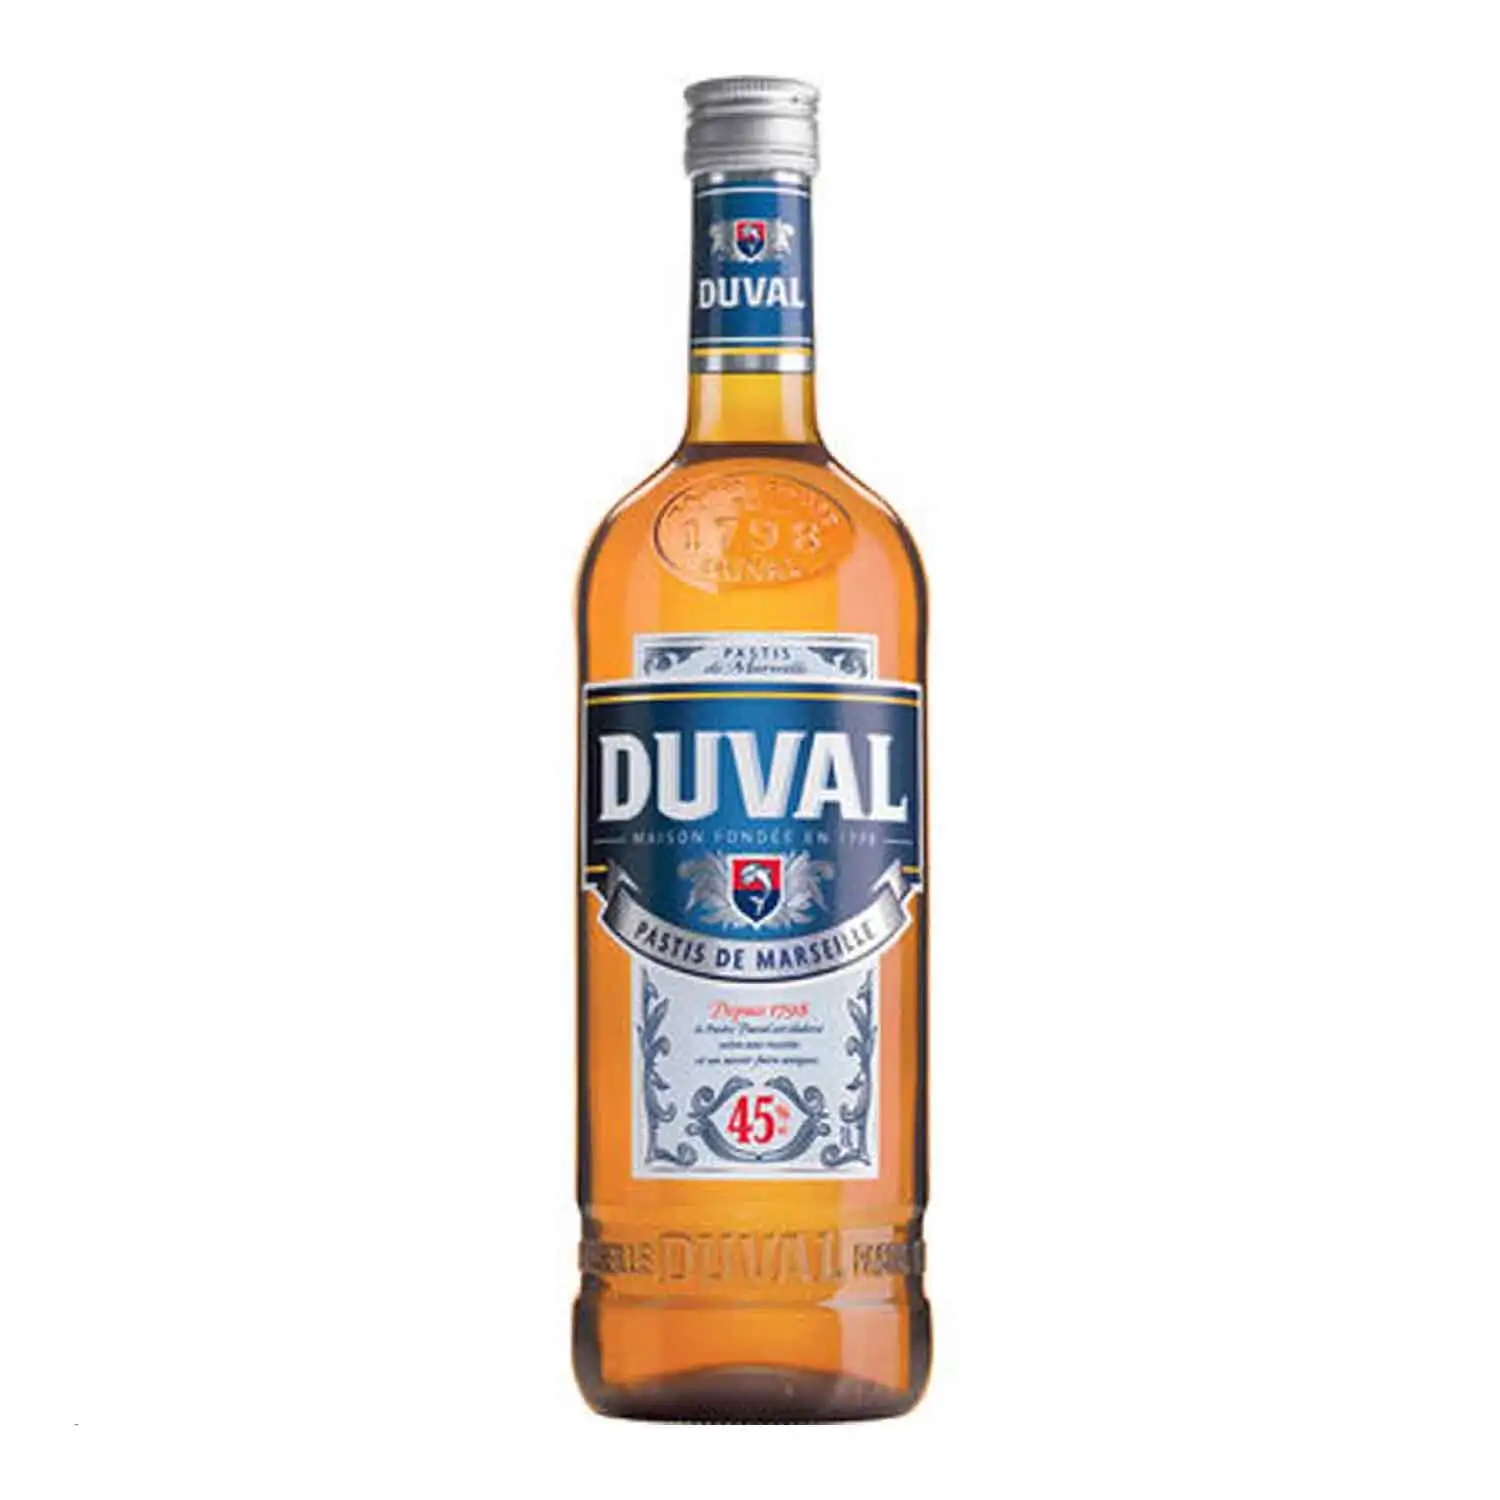 Duval 1l Alc 45% - Buy at Real Tobacco